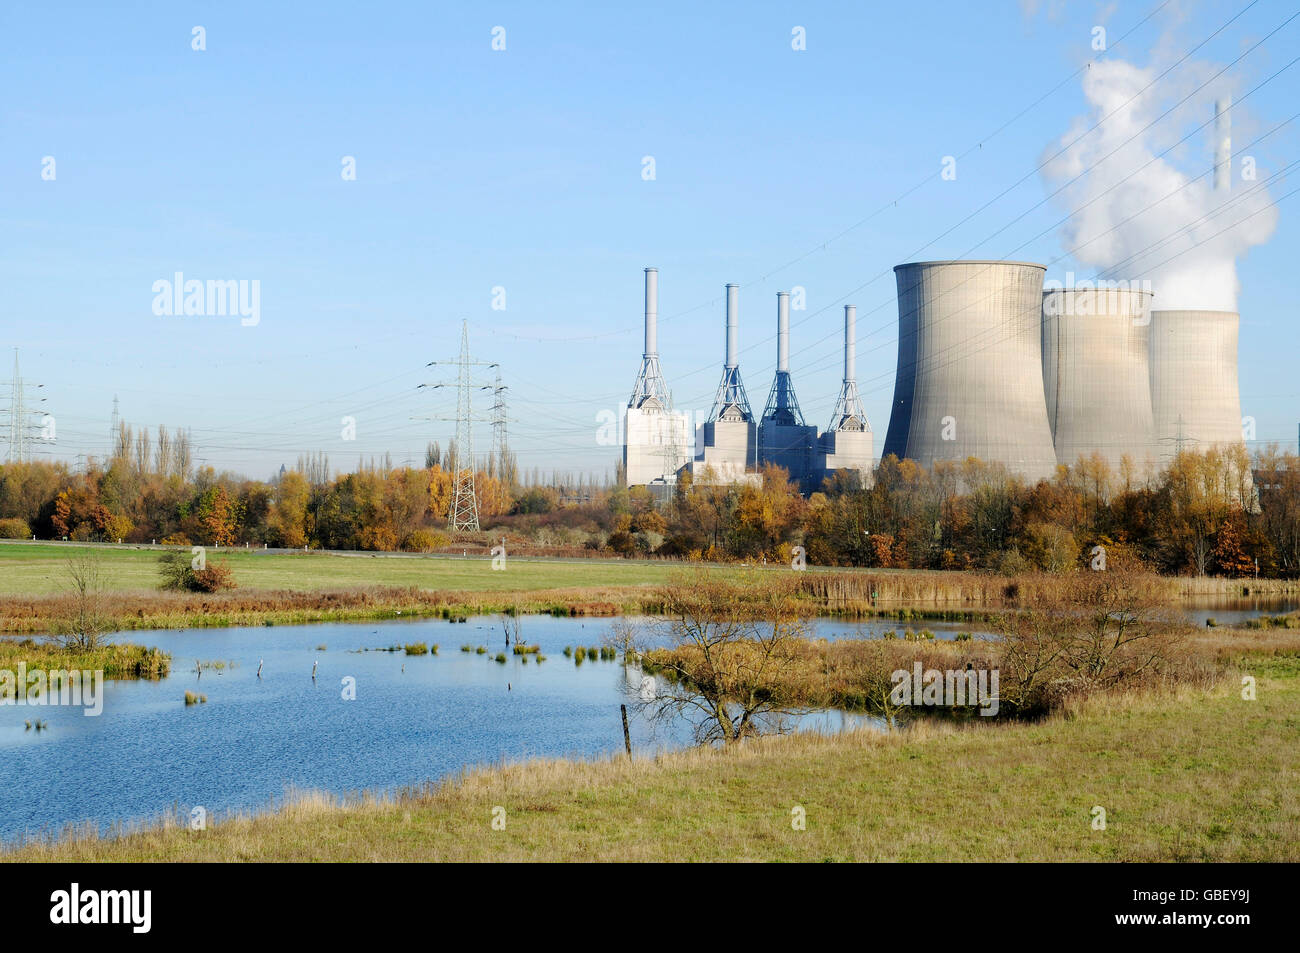 Gersteinwerk plant, RWE Power AG, Tibaum nature reserve, Stockum-Werne, North Rhine-Westphalia, Germany / Combined cycle power plant, coal, natural gas Stock Photo